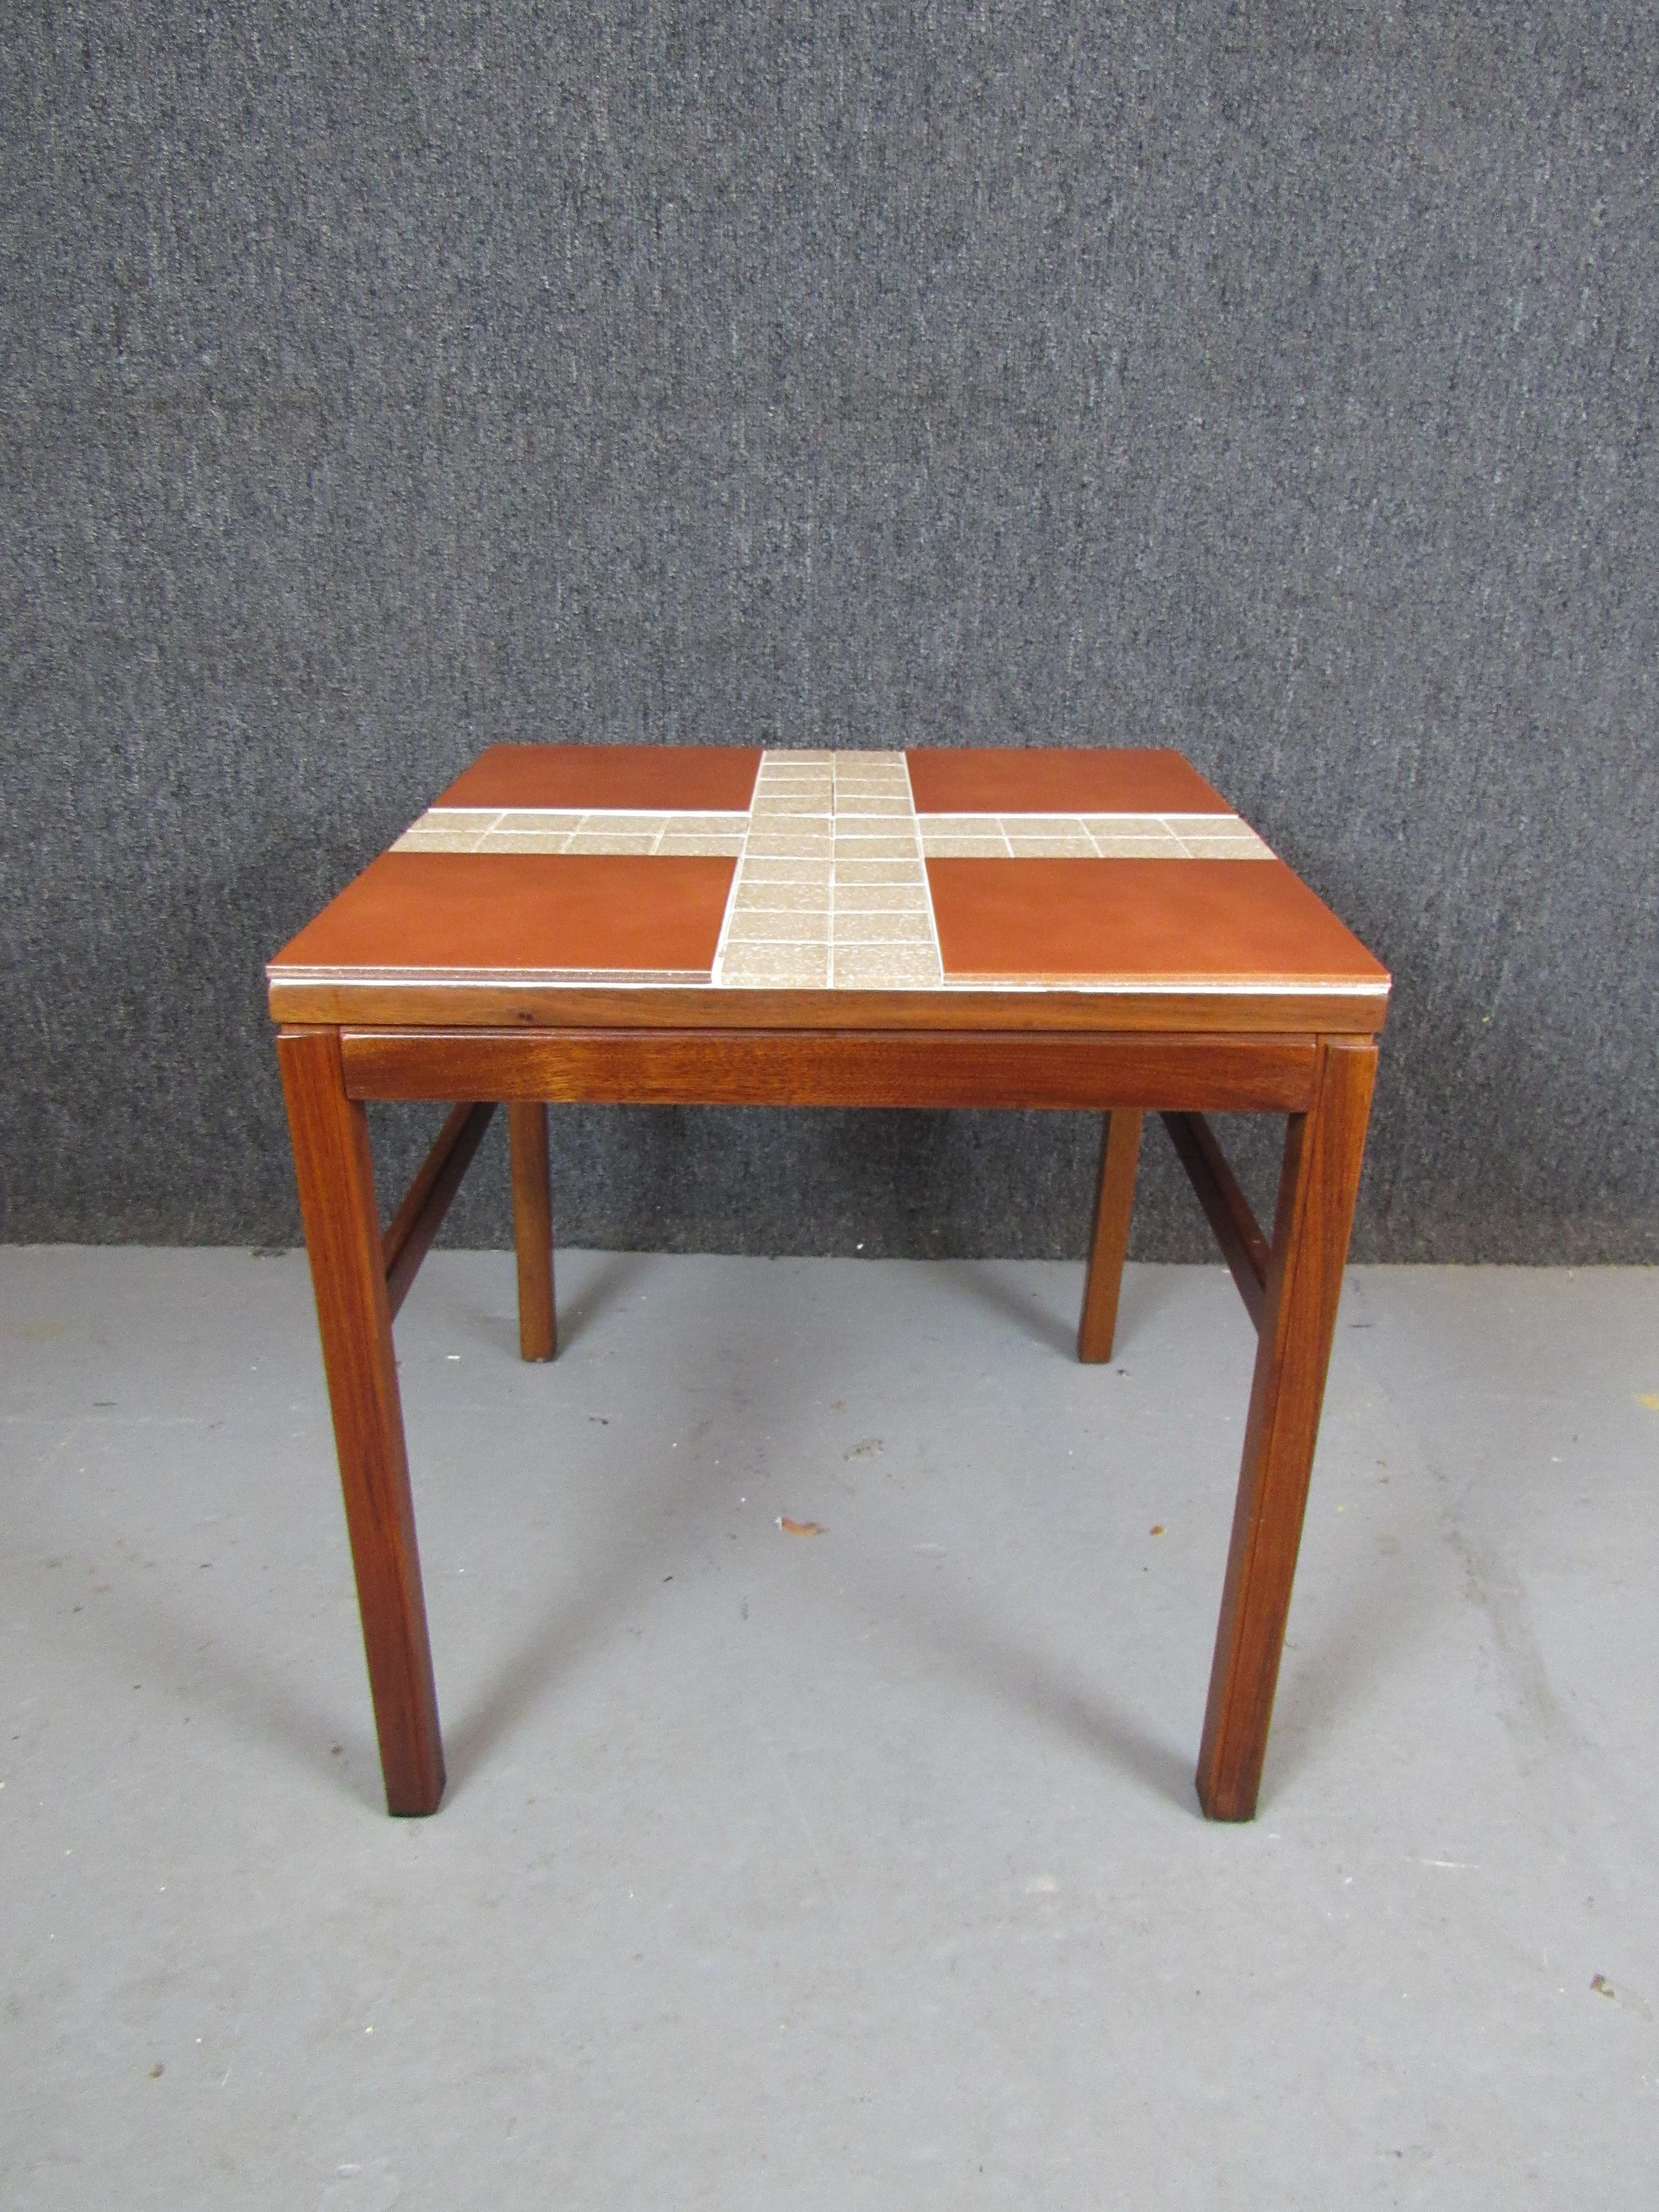 American Vintage Terracota Tile & Teak Table by Arbatove For Sale